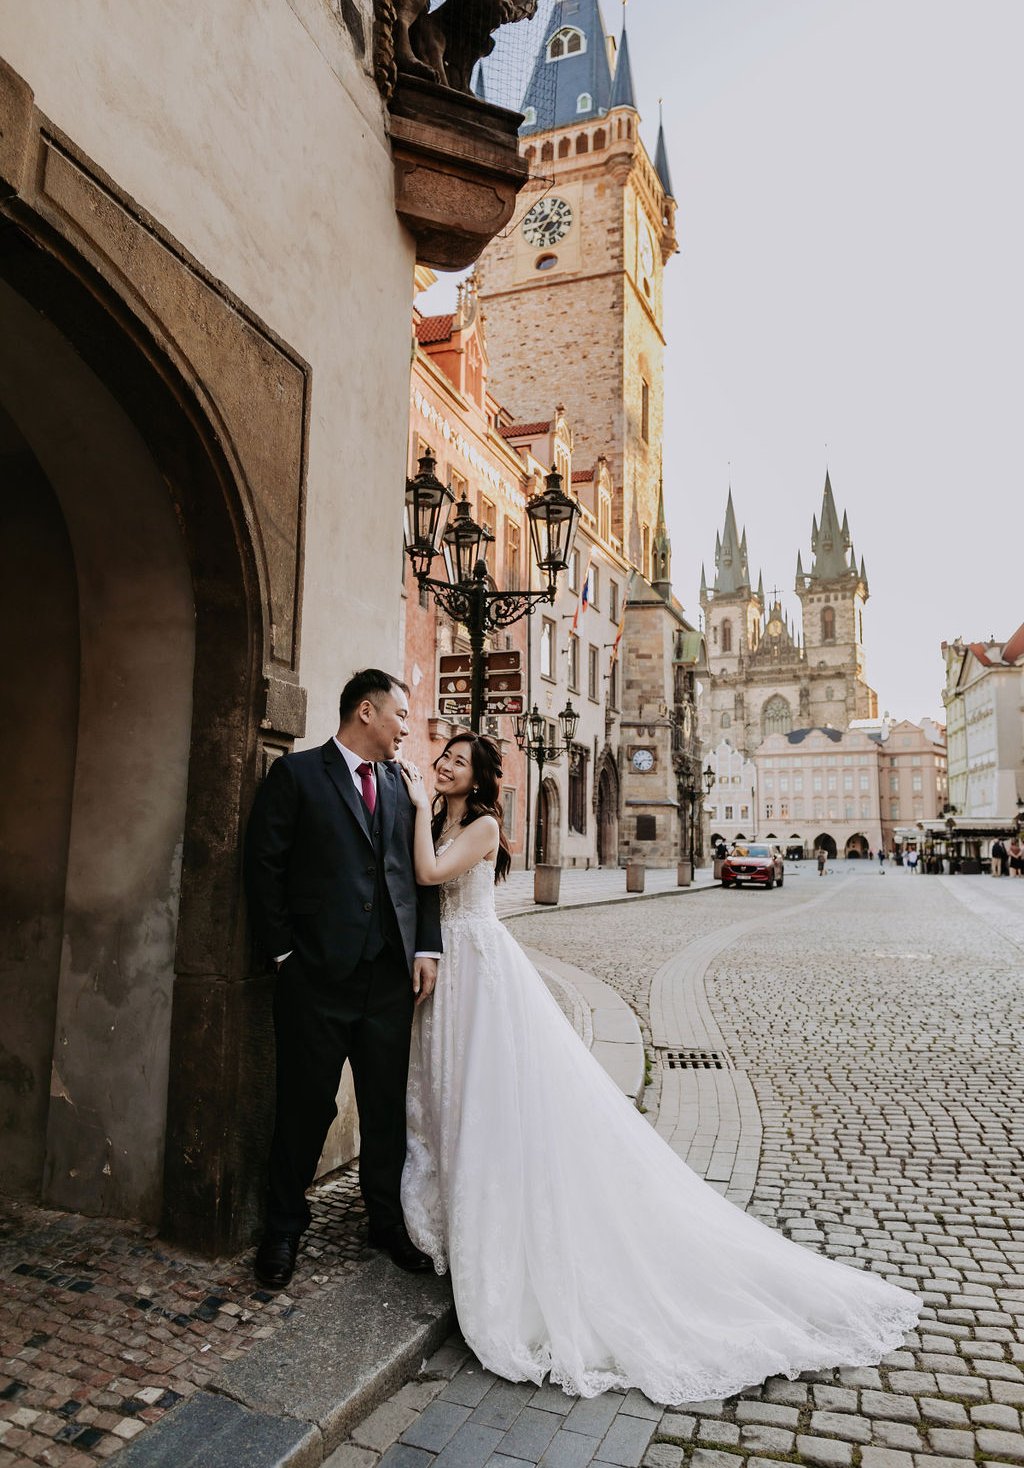 Prague prewedding photoshoot at St Vitus Cathedral, Charles Bridge, Vltava Riverside and Old Town Square Astronomical Clock